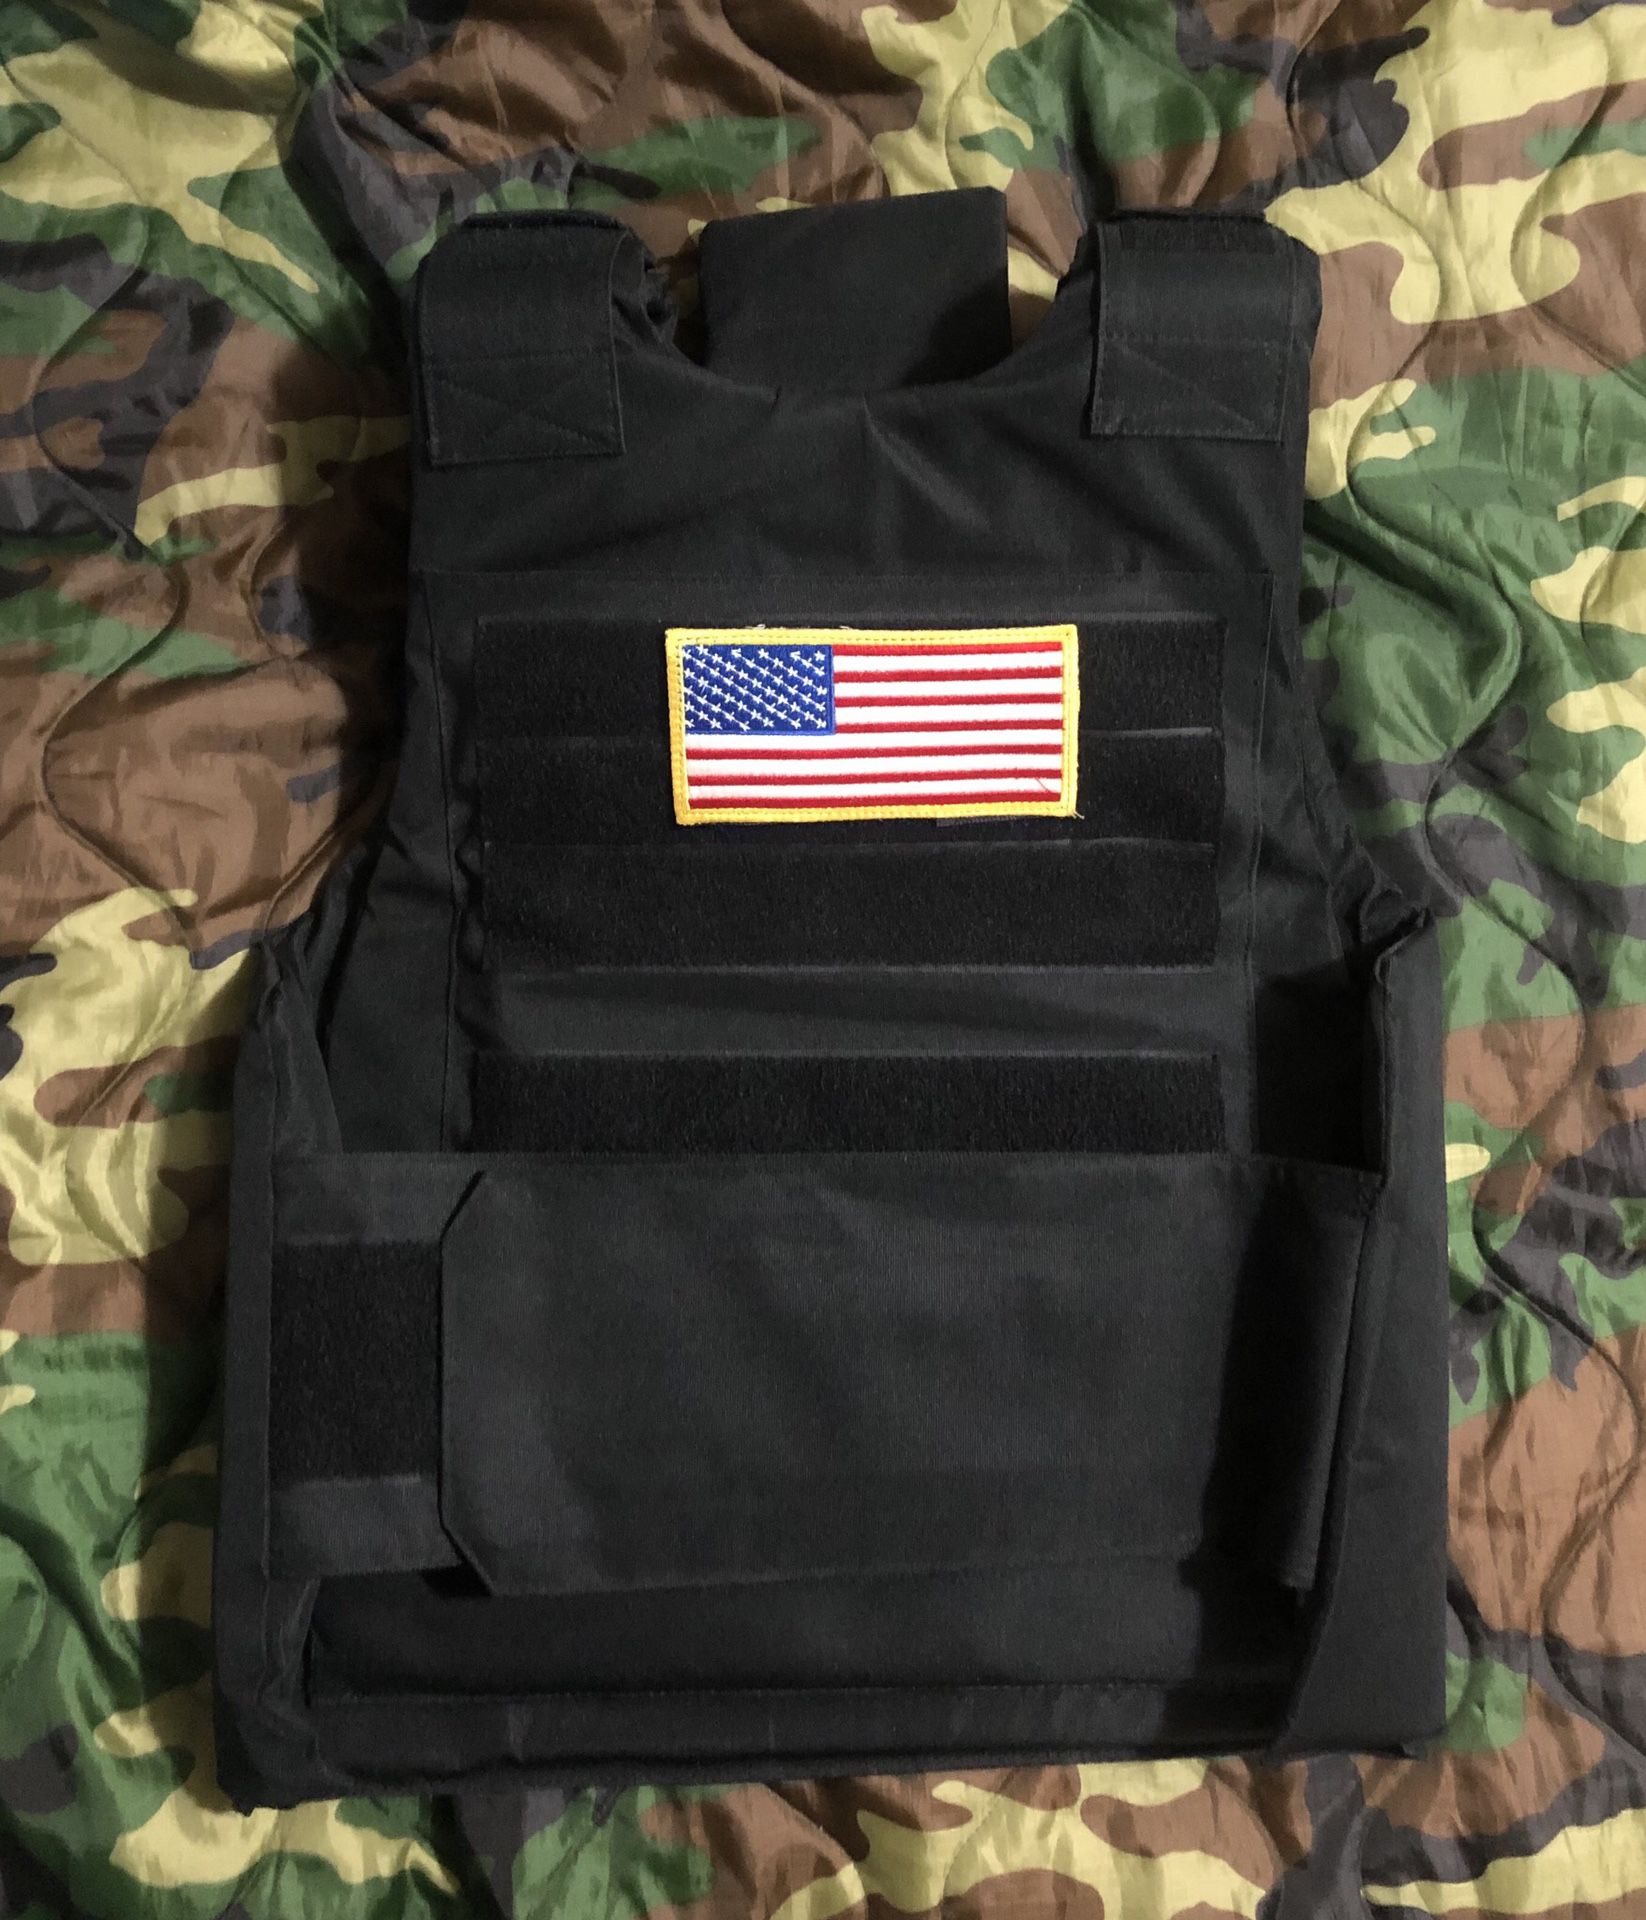 Plate carrier vest (Delta Force style)